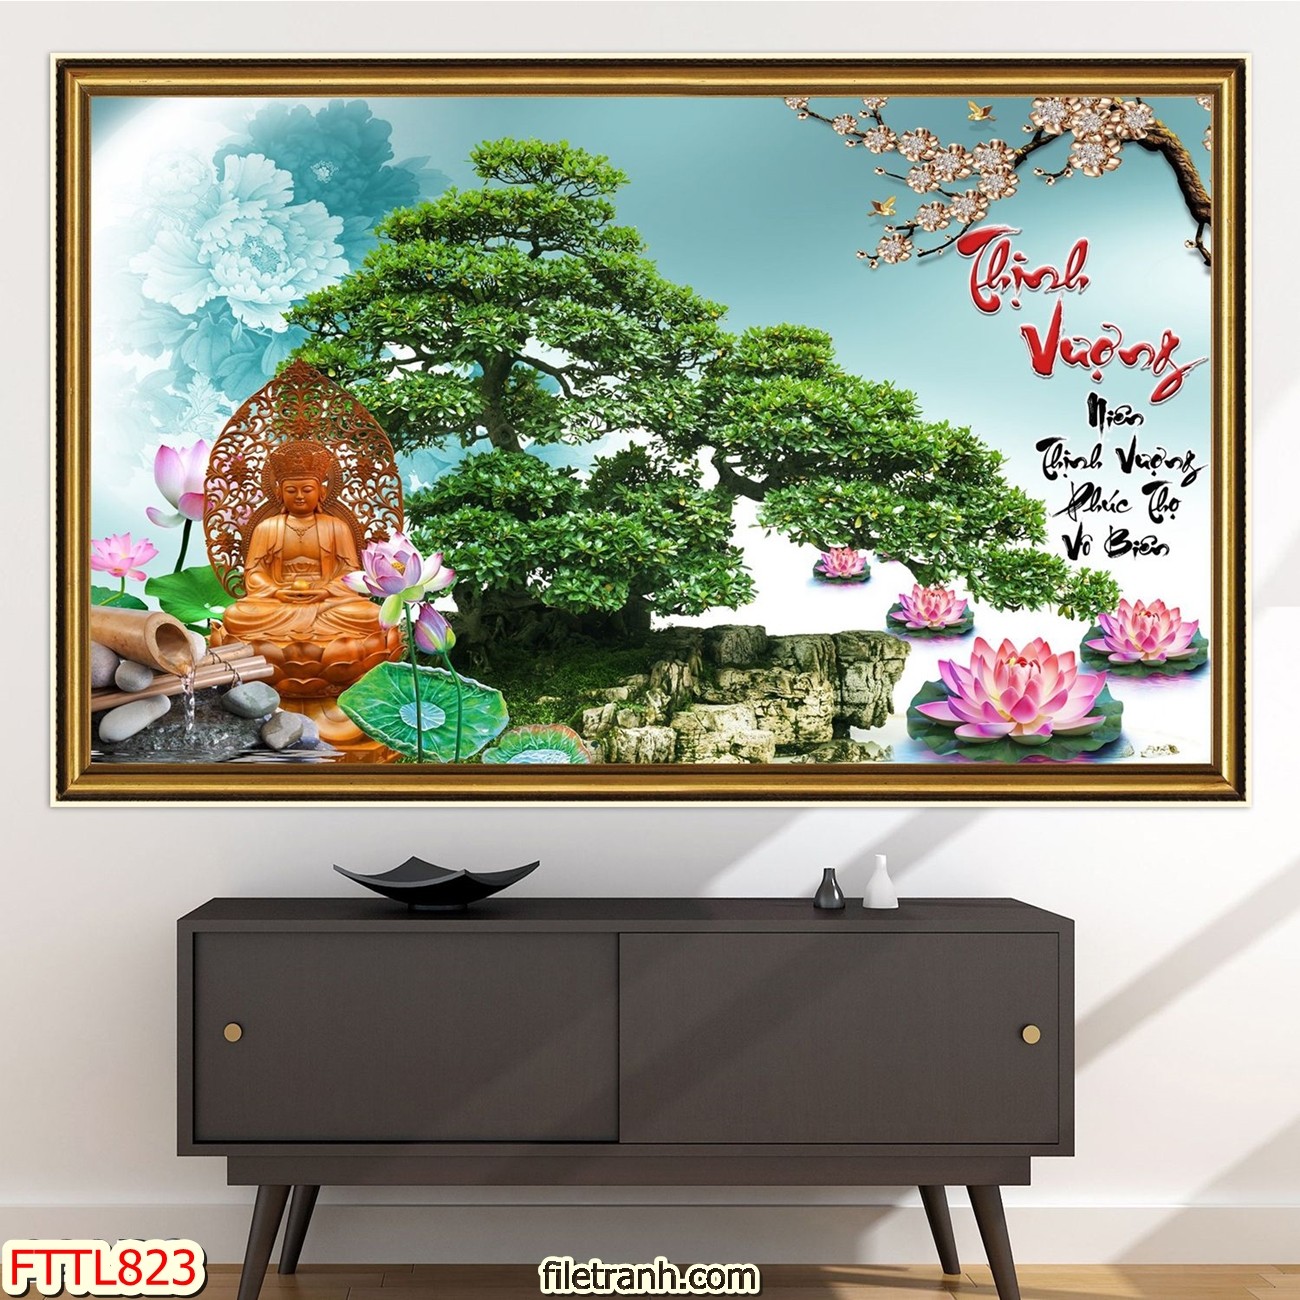 https://filetranh.com/file-tranh-chau-mai-bonsai/file-tranh-chau-mai-bonsai-fttl823.html